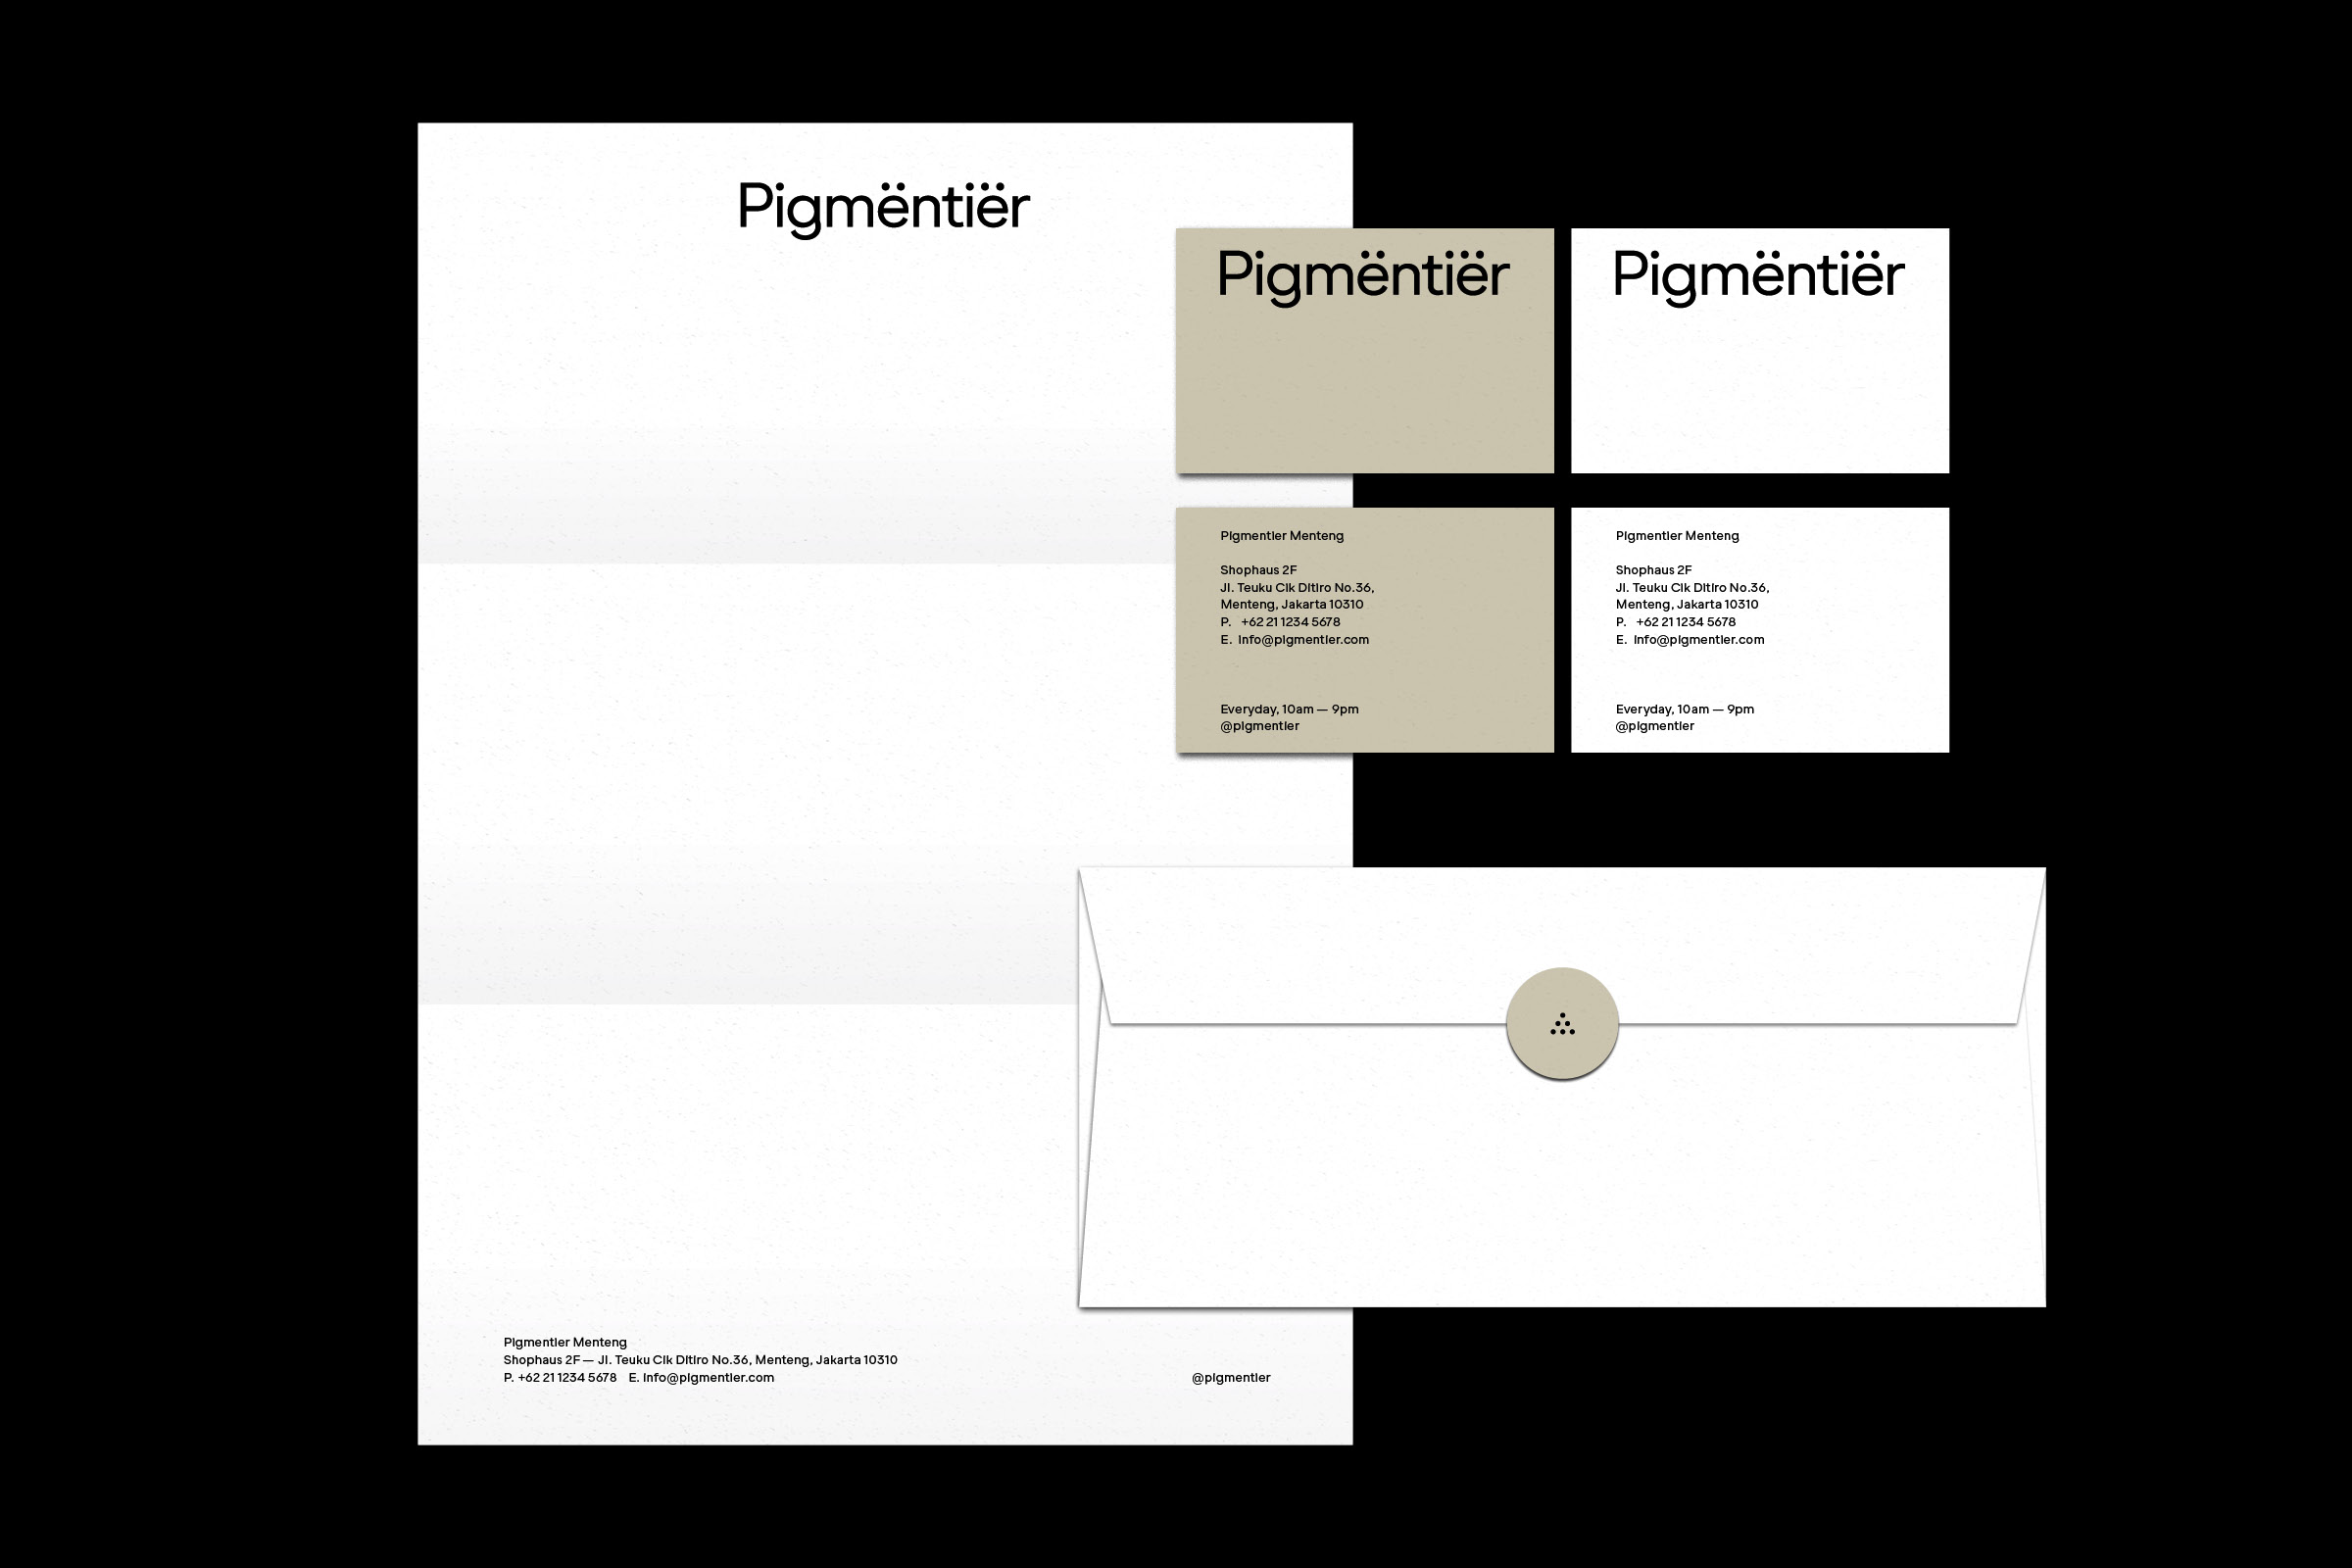 pigmentier-application6